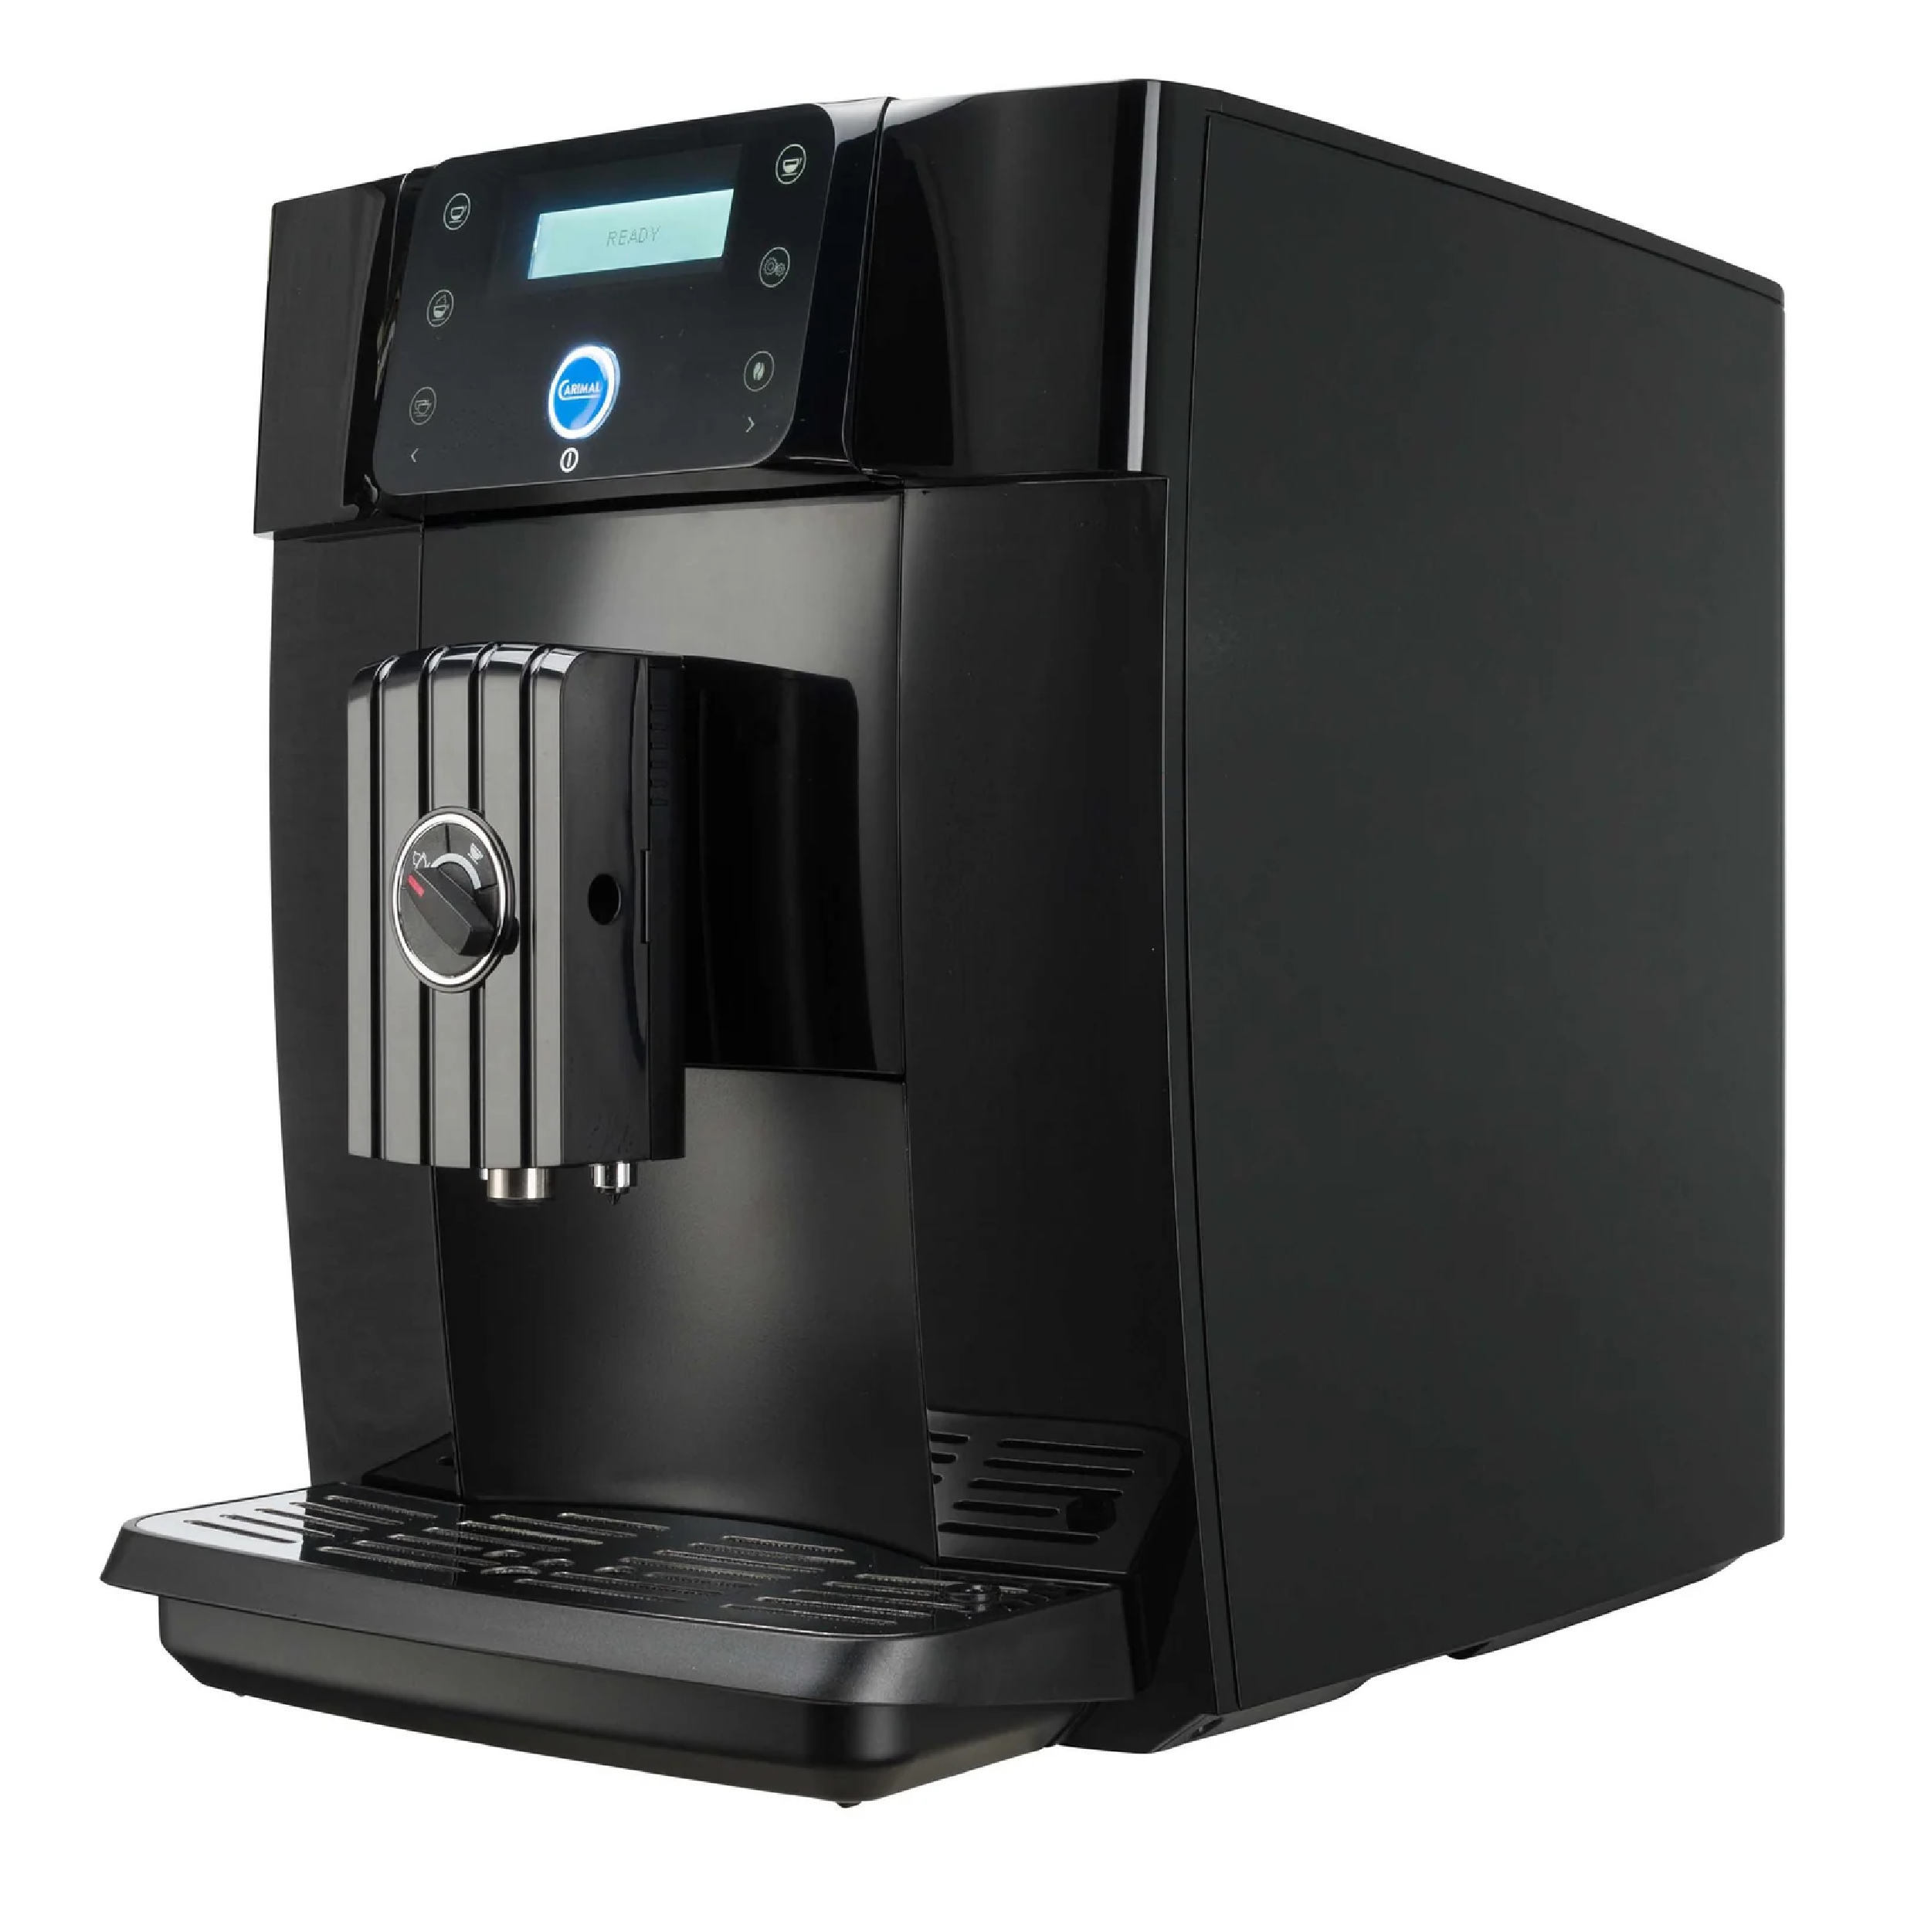 CARIMALI CA250 AUTOMATIC COFFEE MACHINE